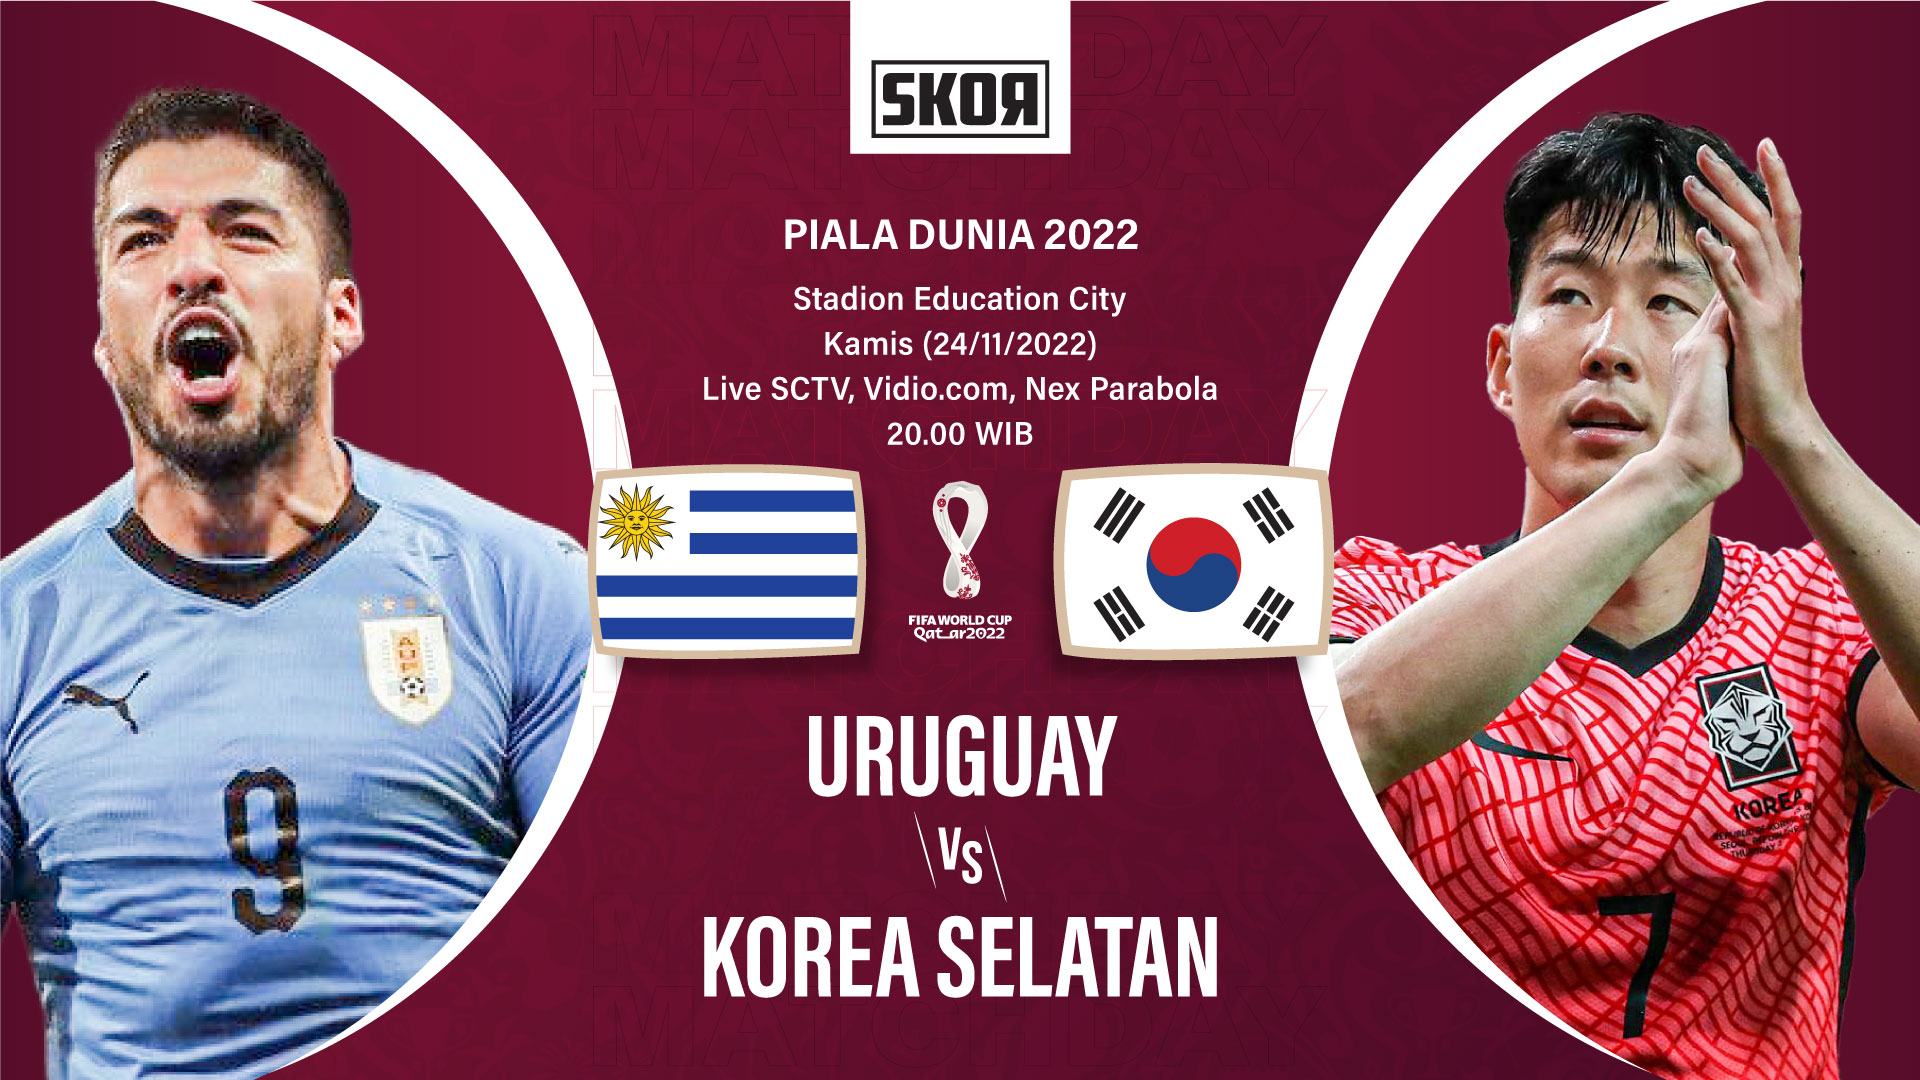 Piala Dunia 2022: Head to Head Uruguay vs Korea Selatan